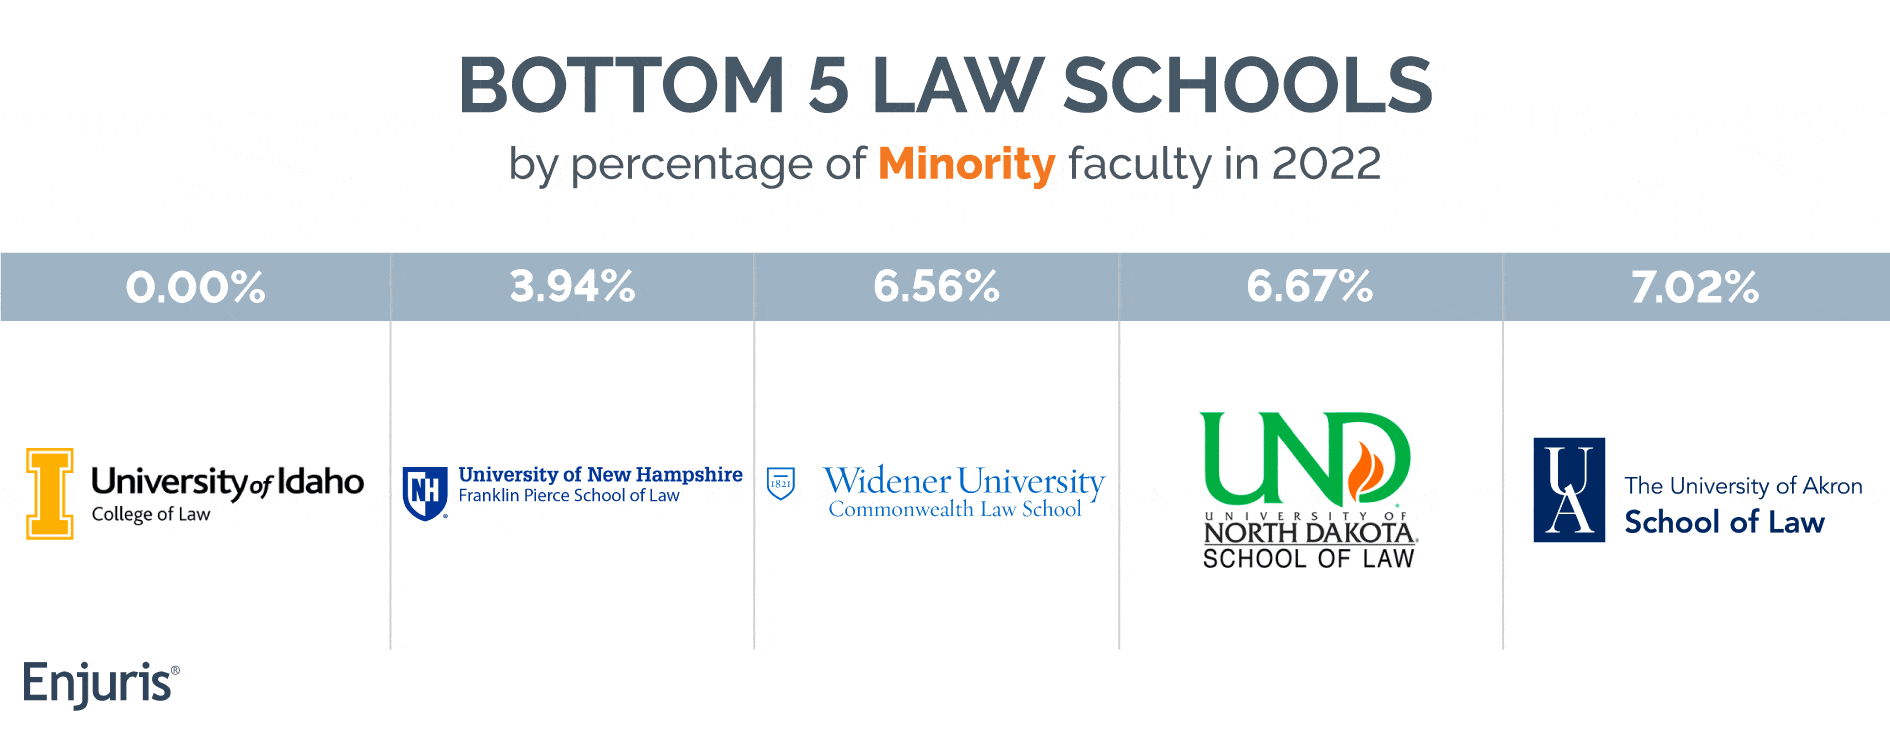 Bottom 5 law schools by percentage of minority faculty in 2022